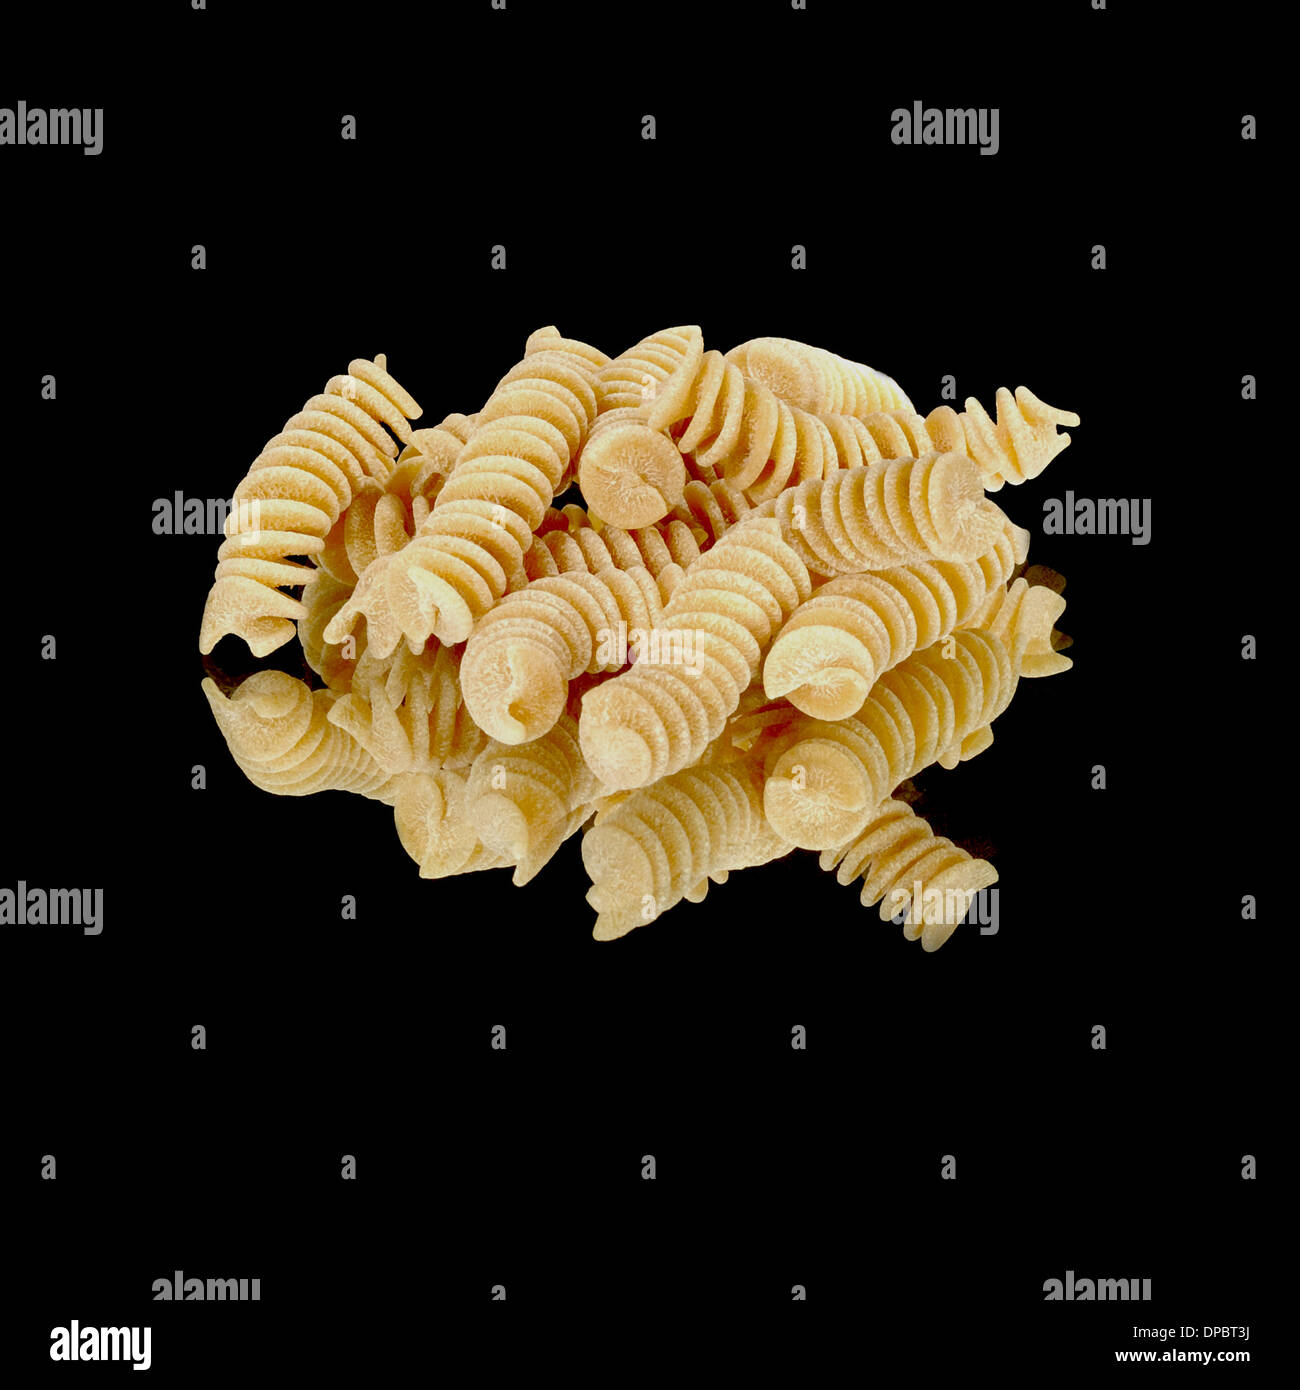 Fusilli Italian Pasta on black background with mirror image reflection. Whole wheat pasta Stock Photo